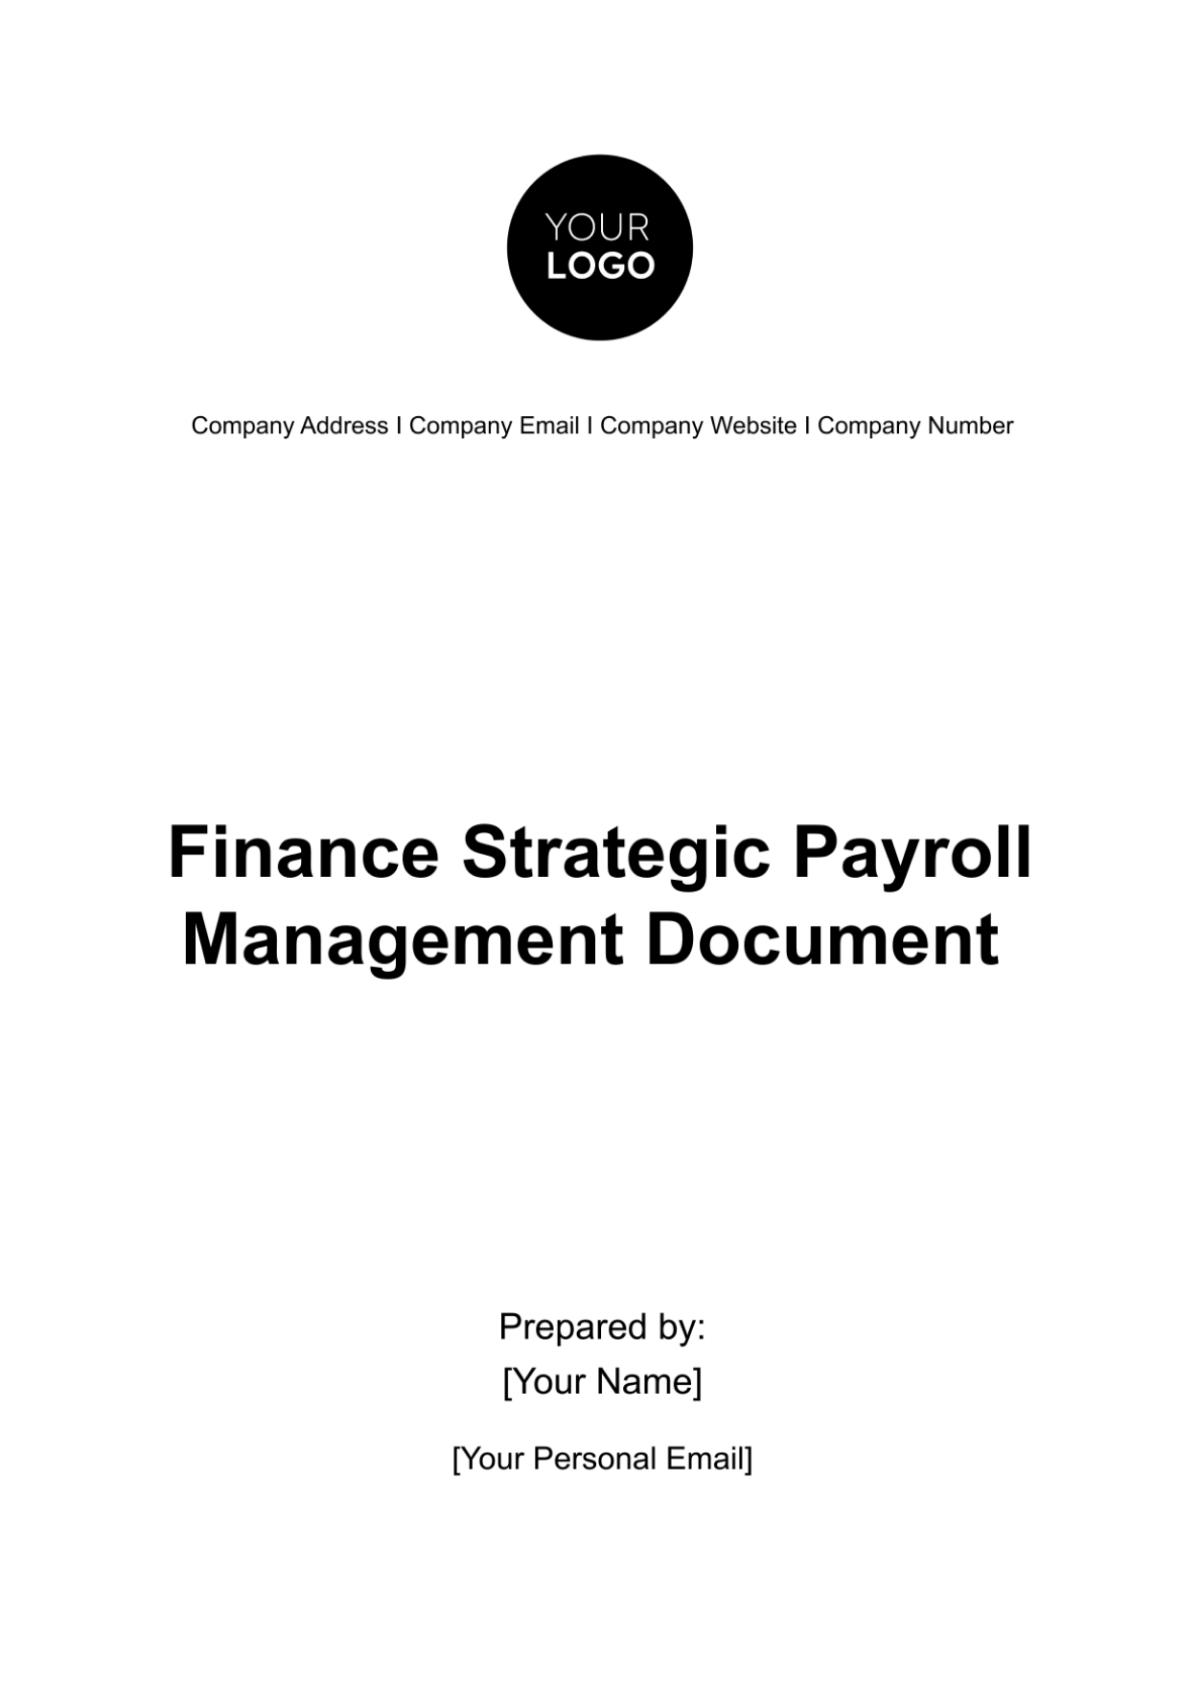 Finance Strategic Payroll Management Document Template